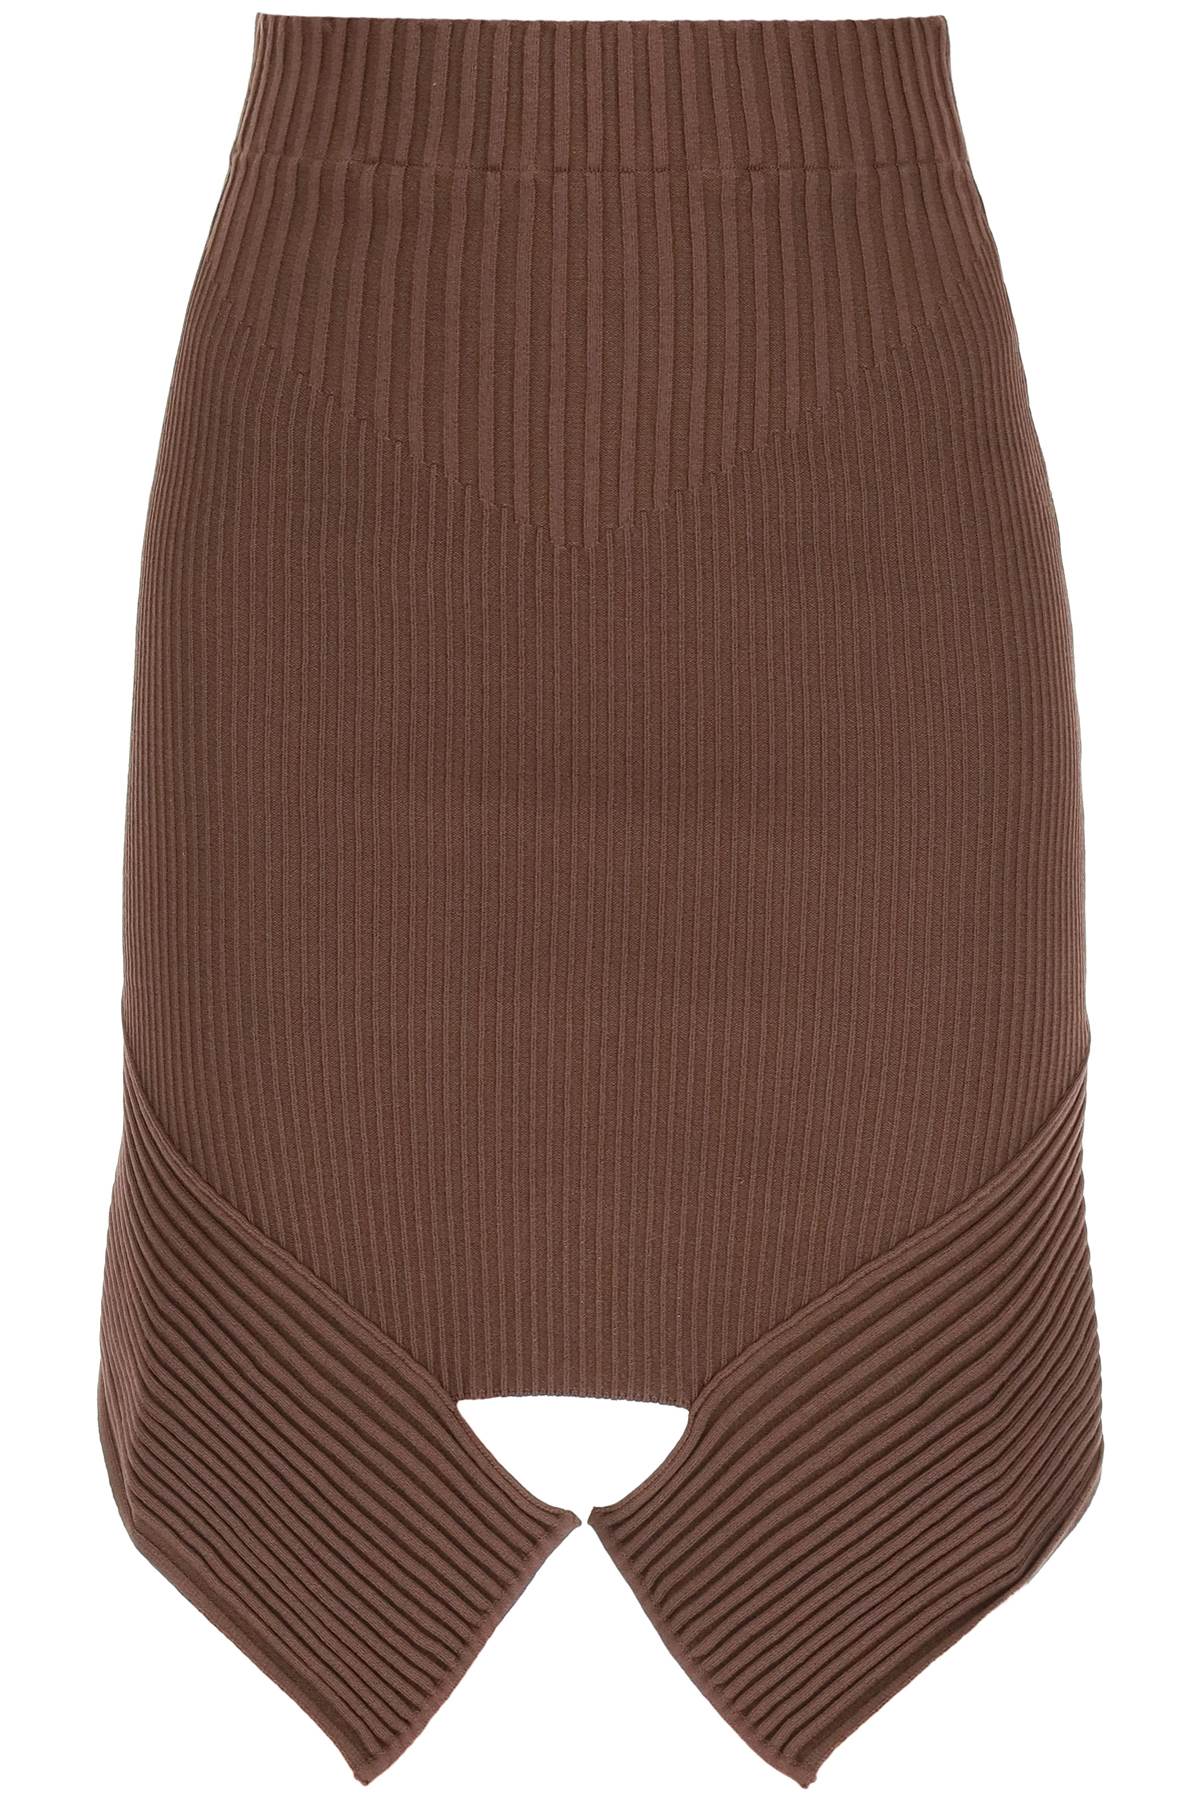 Andrea Adamo Asymmetric Rib Knit Mini Skirt